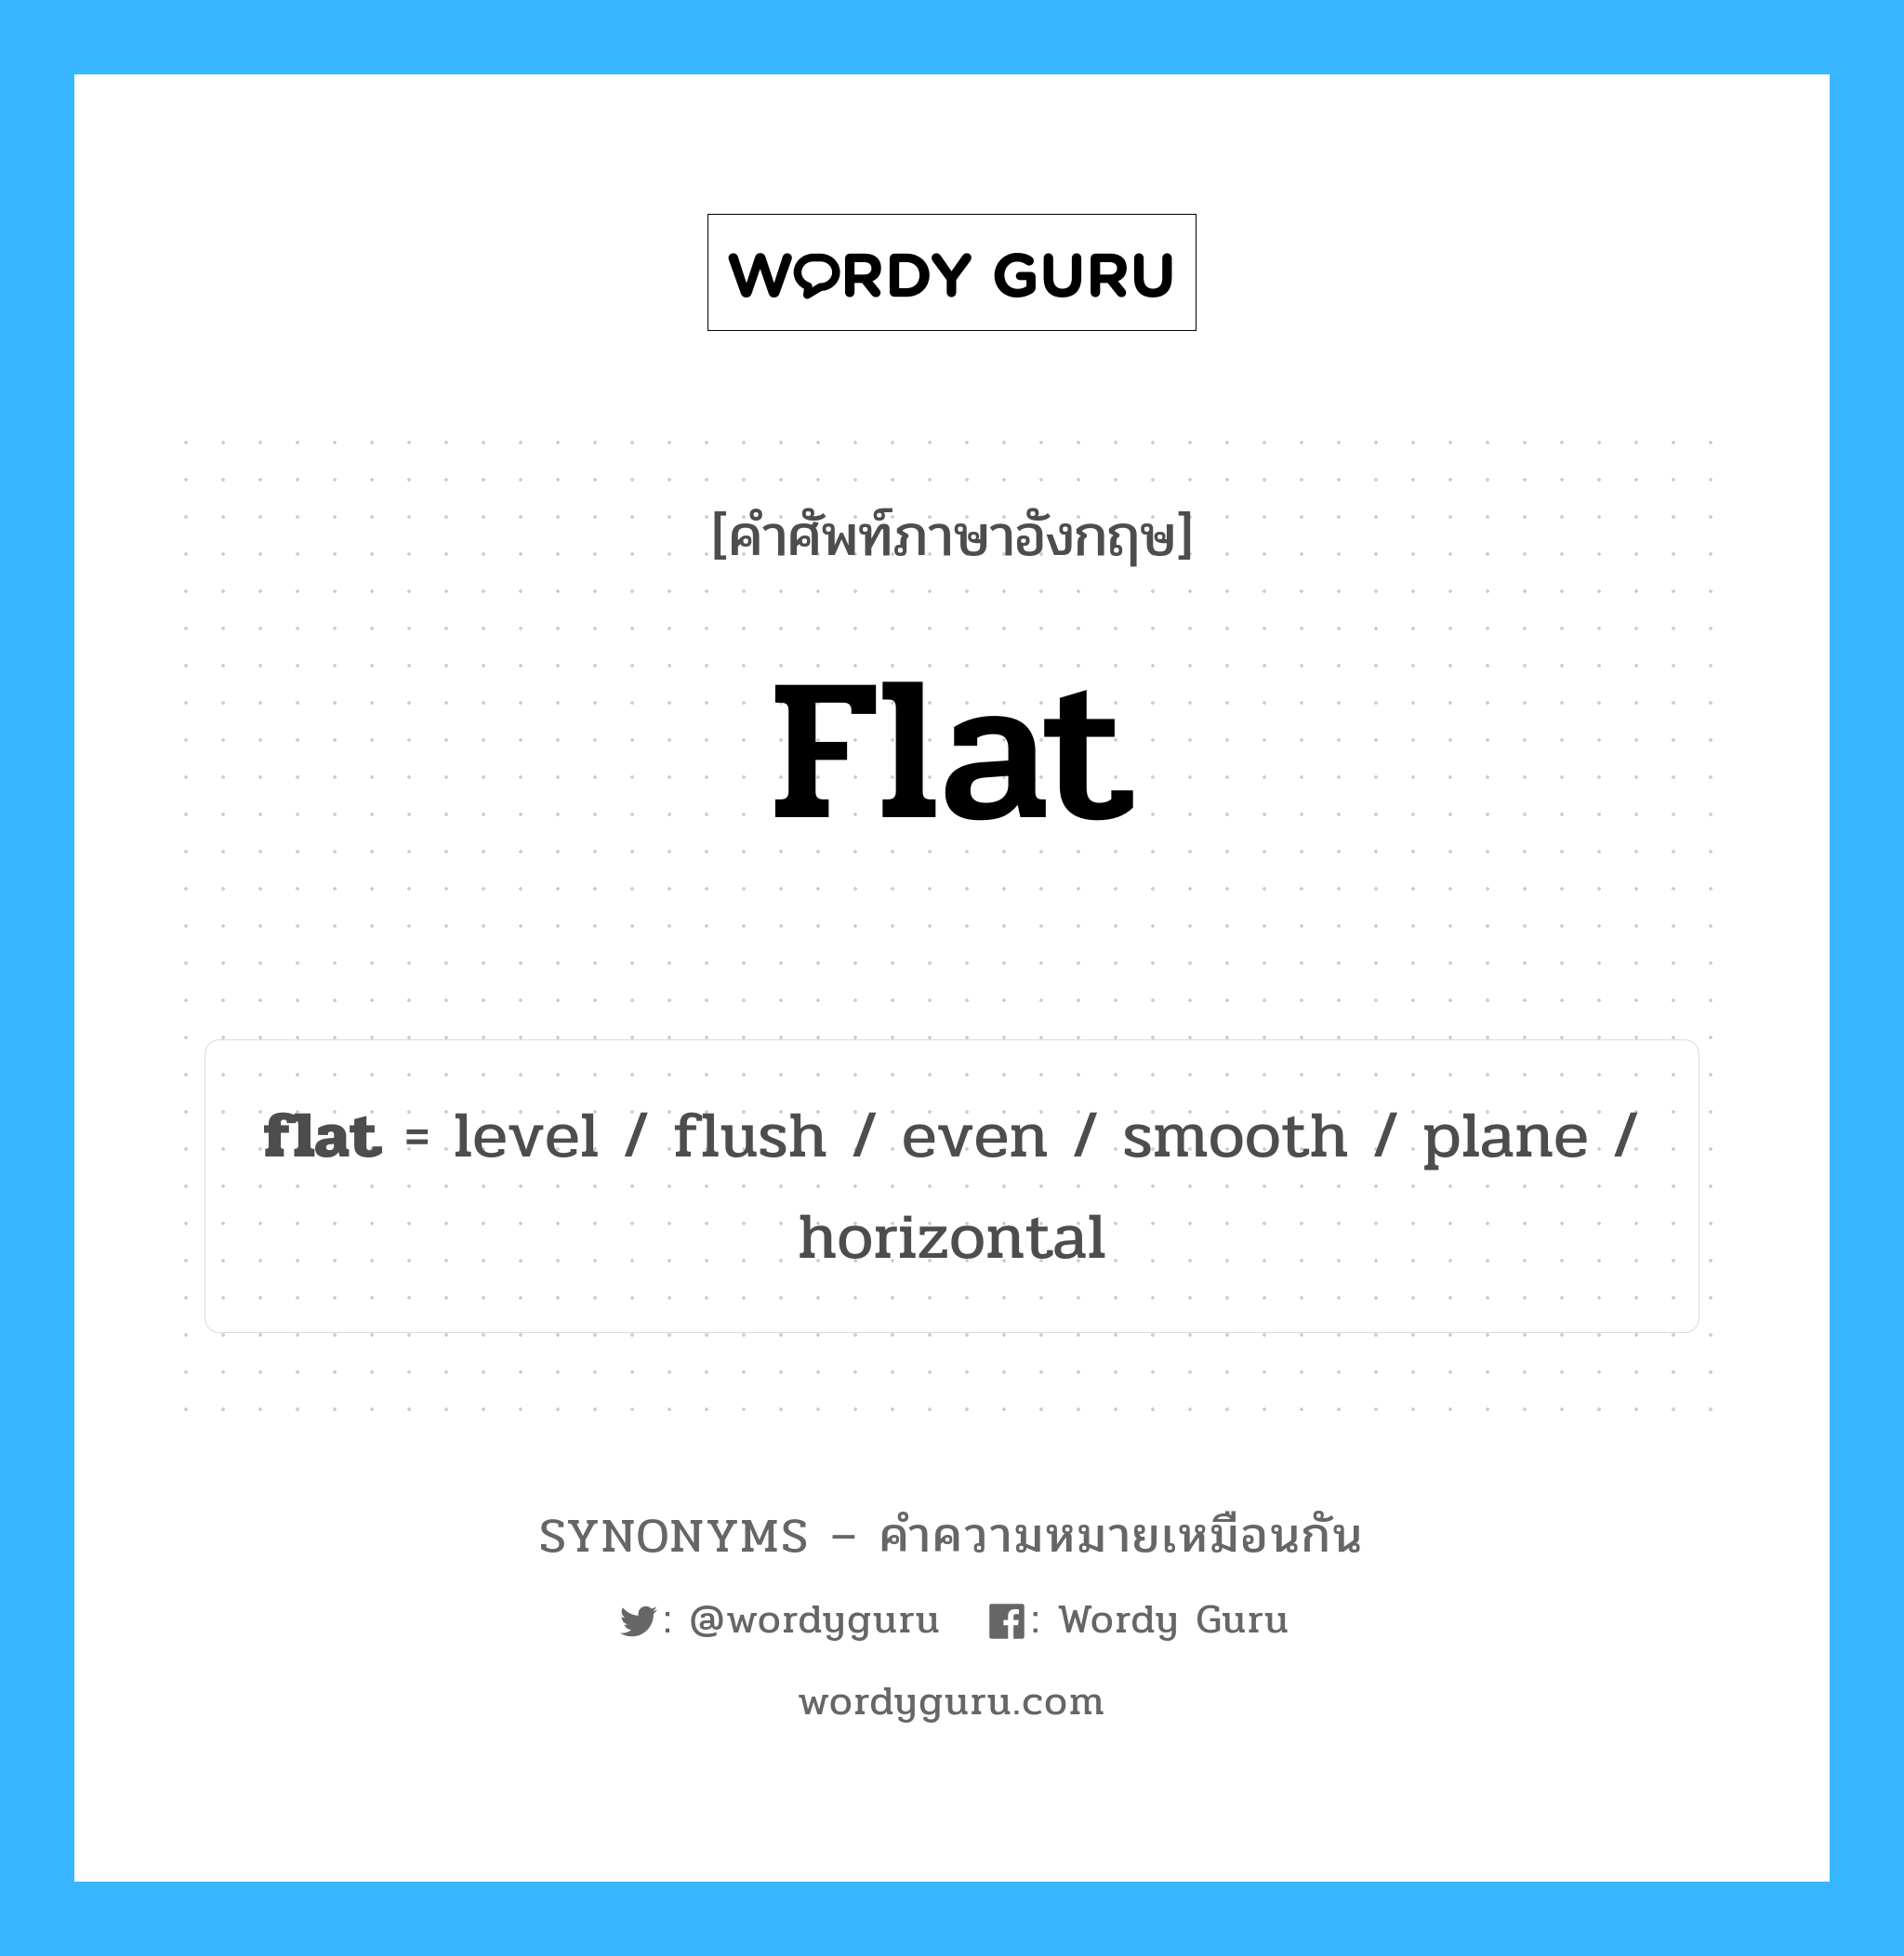 plane เป็นหนึ่งใน flat และมีคำอื่น ๆ อีกดังนี้, คำศัพท์ภาษาอังกฤษ plane ความหมายคล้ายกันกับ flat แปลว่า เครื่องบิน หมวด flat